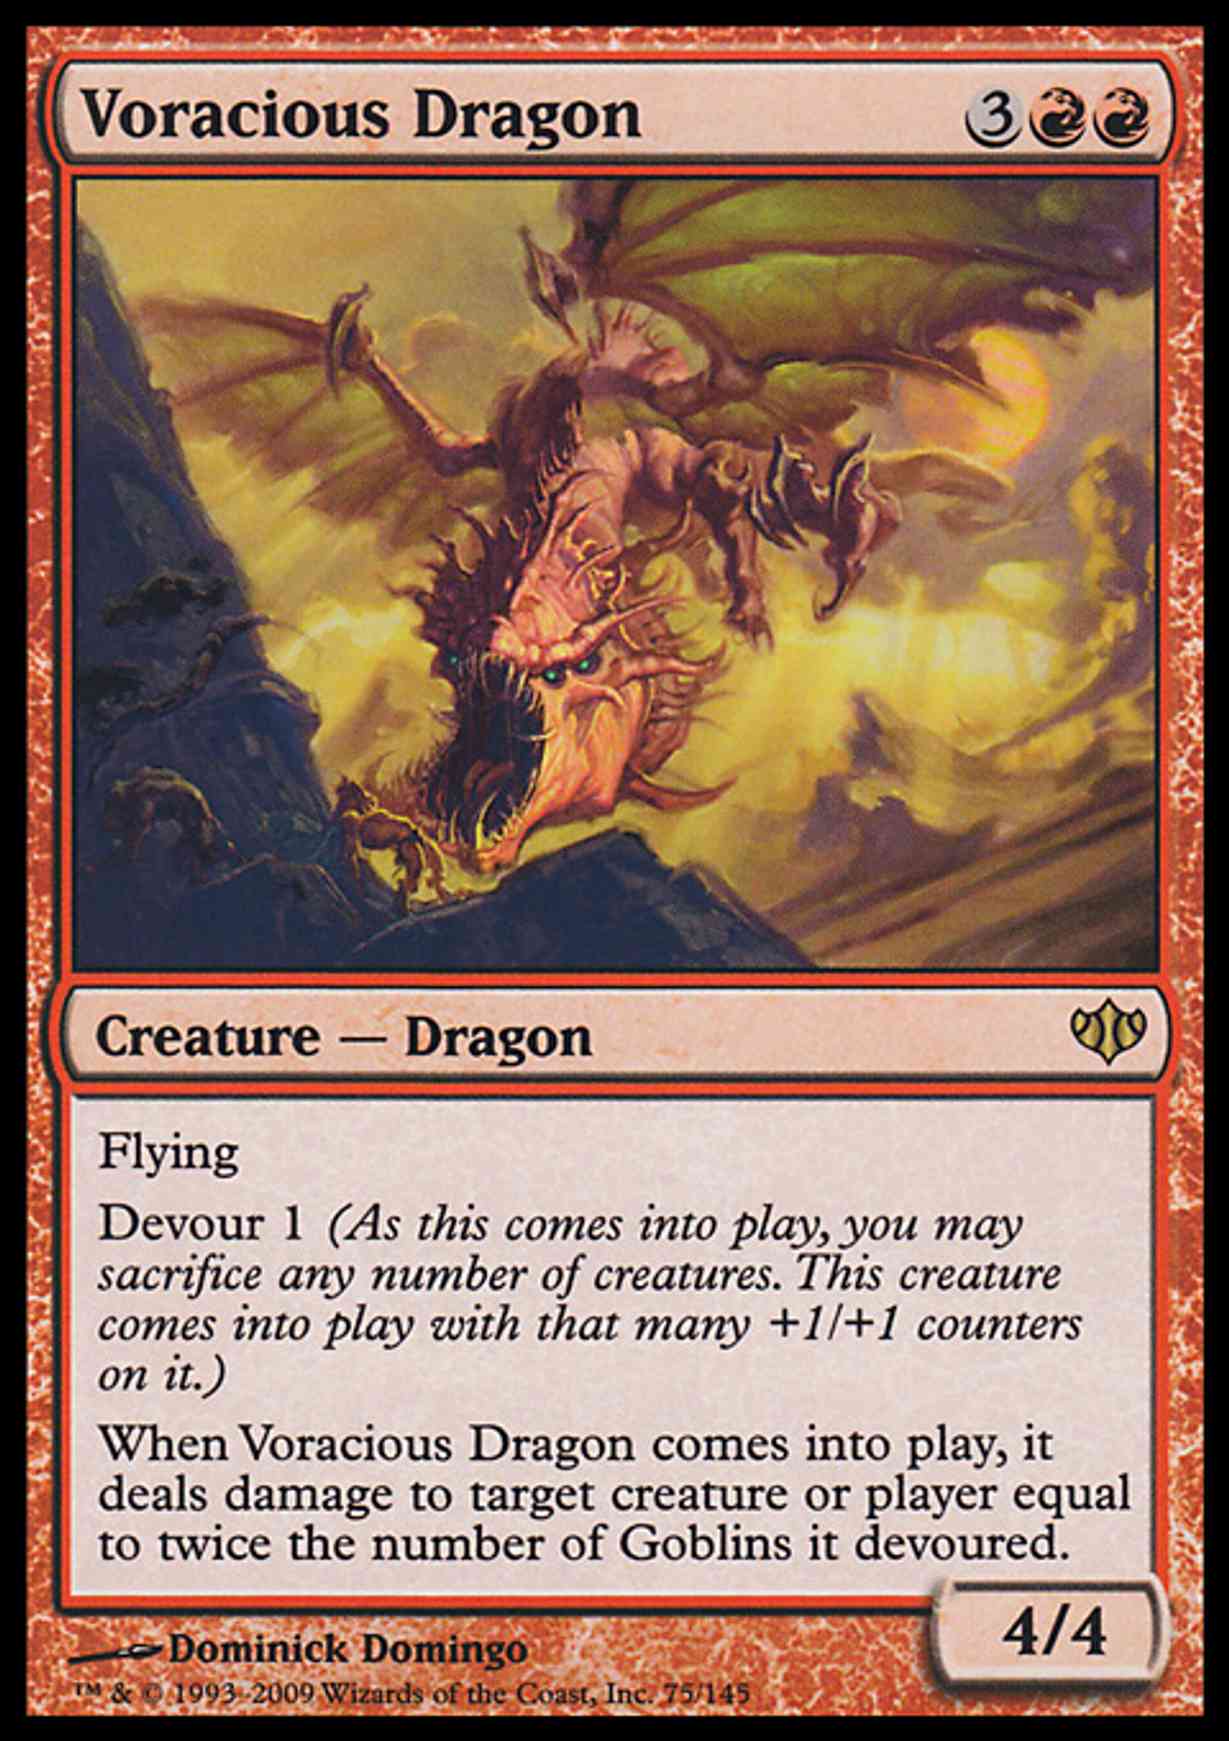 Voracious Dragon magic card front